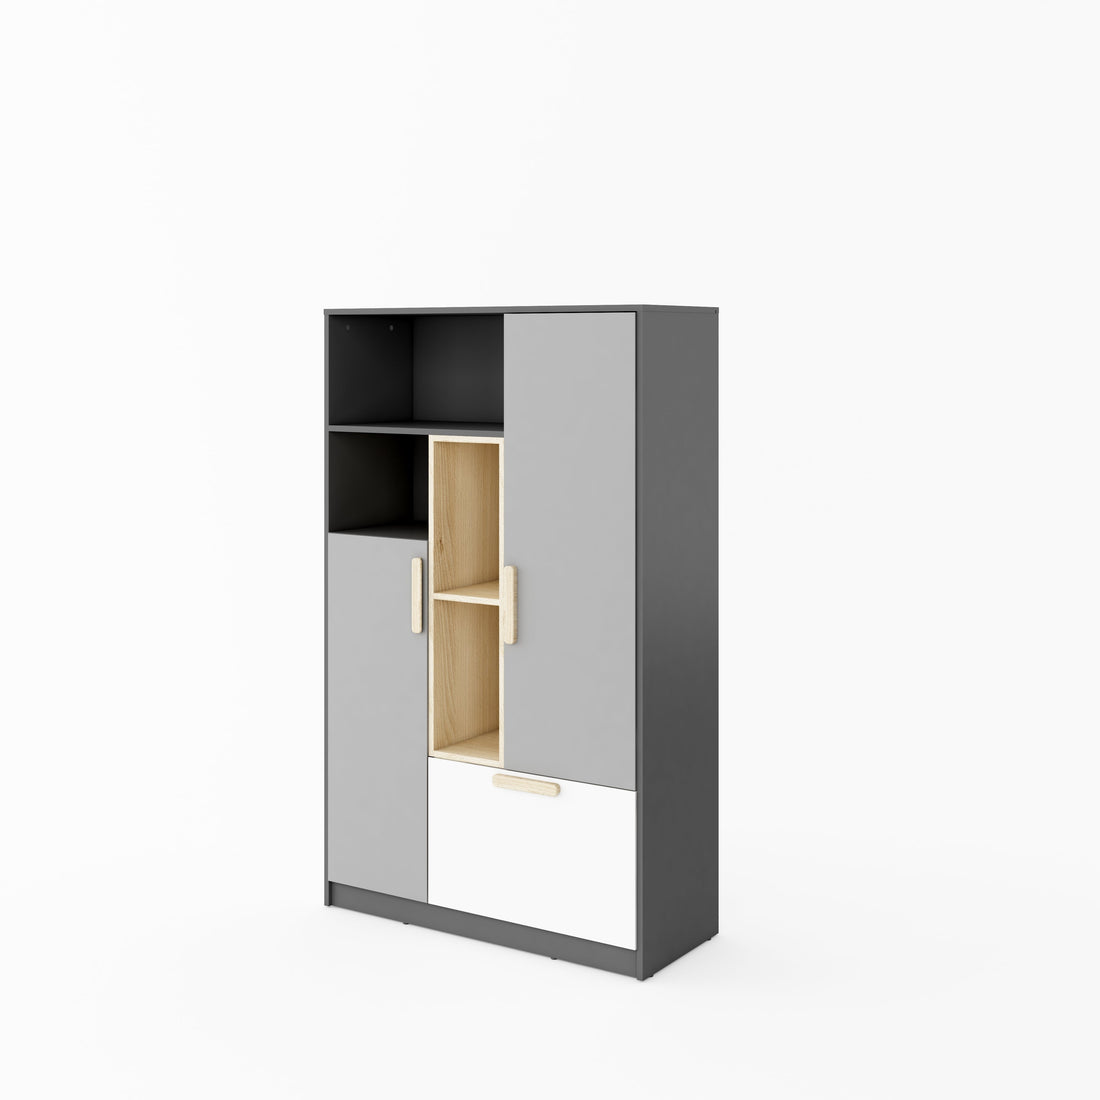 Pok PO-05 Sideboard Cabinet - £234.0 - Kids Sideboard Cabinet 